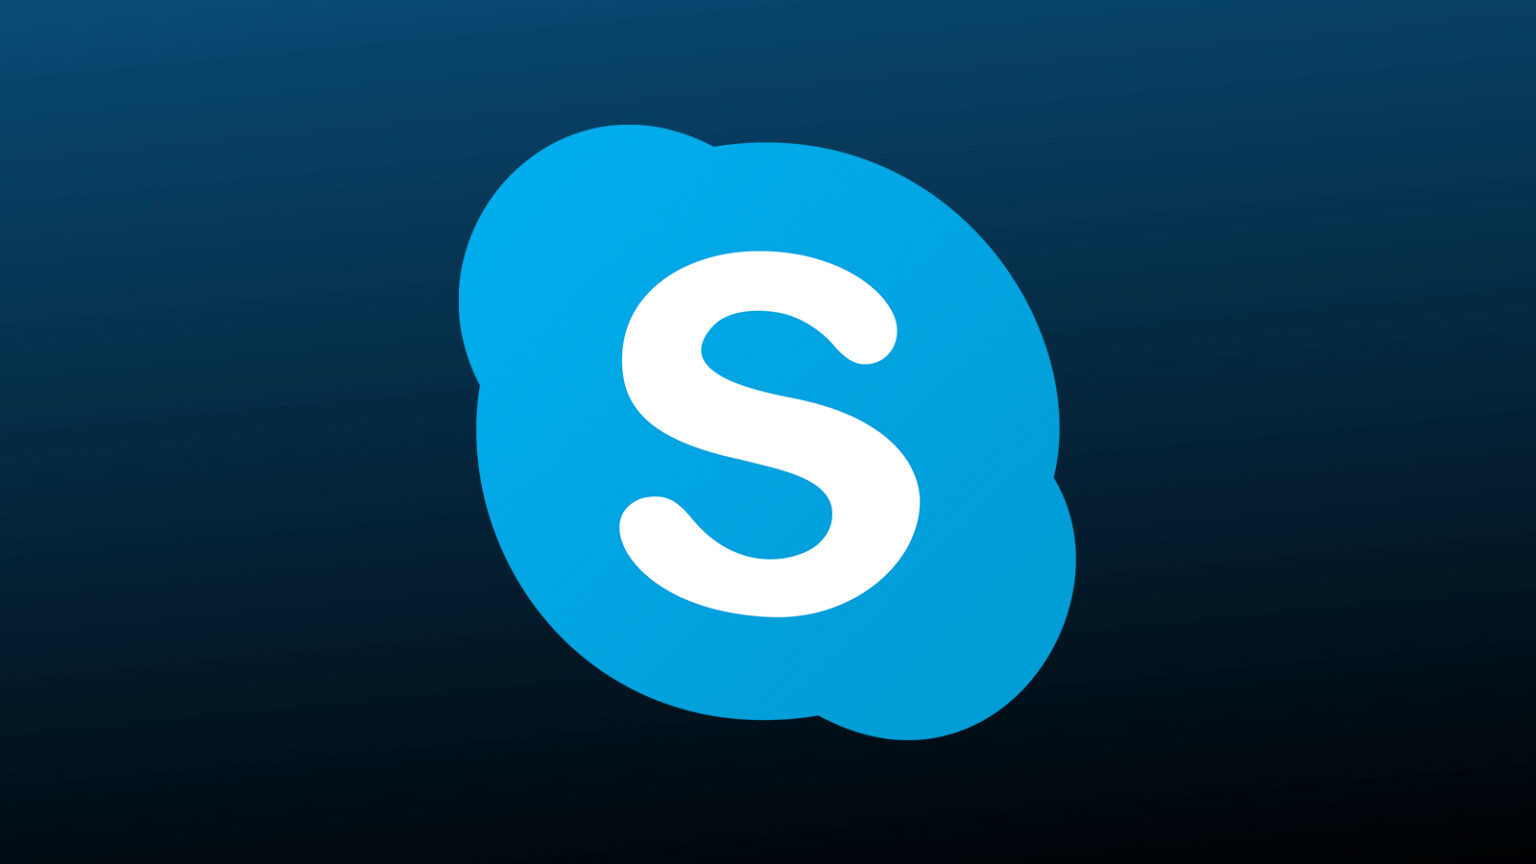 Microsoft Introduces Automatic Background Blur in Skype - TechNadu